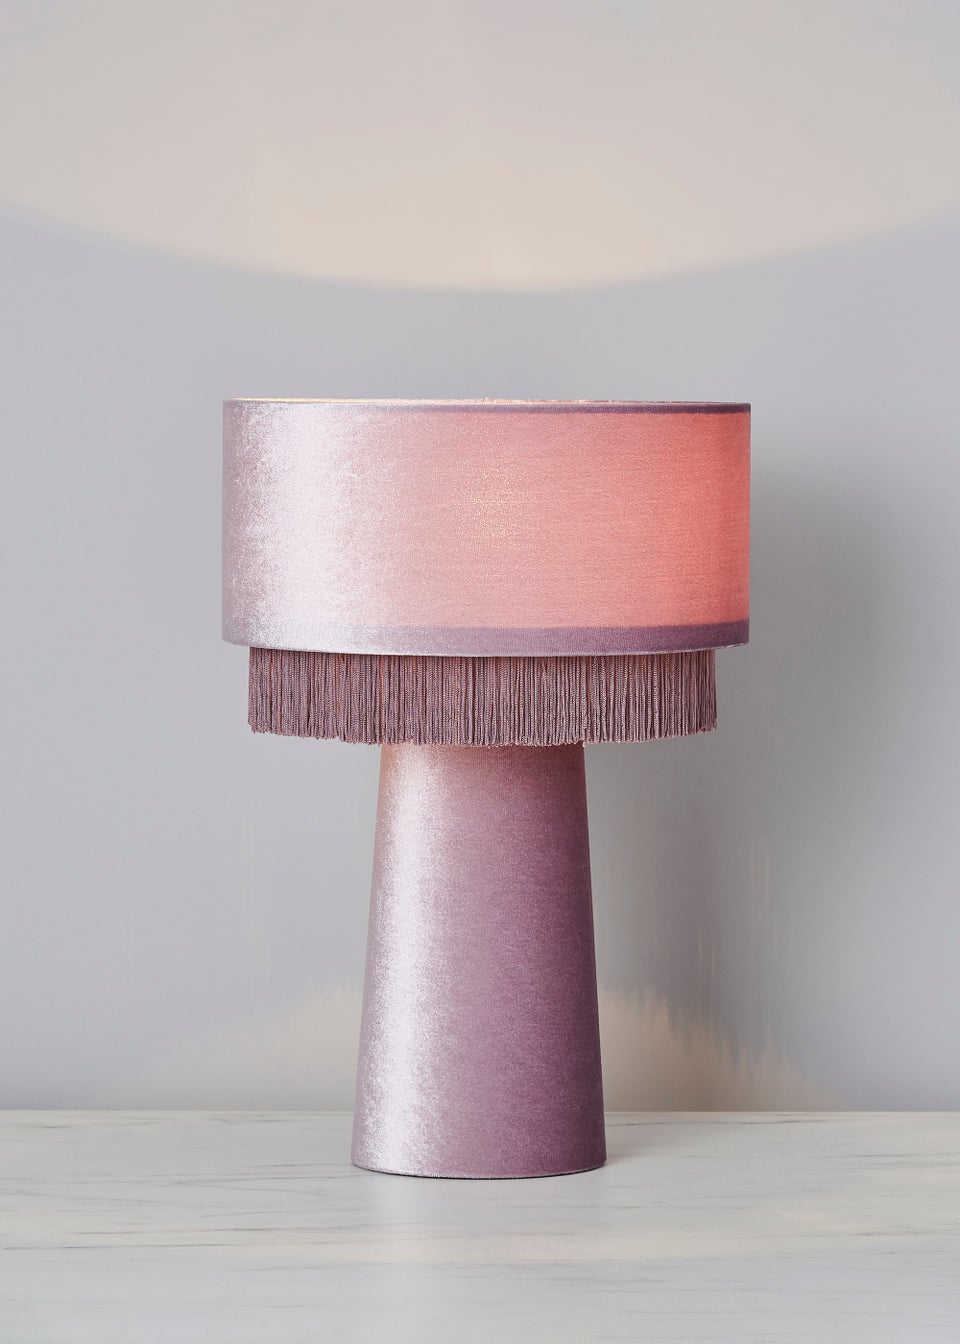 Inlight Fringed Table Lamp (37cm x 25cm)